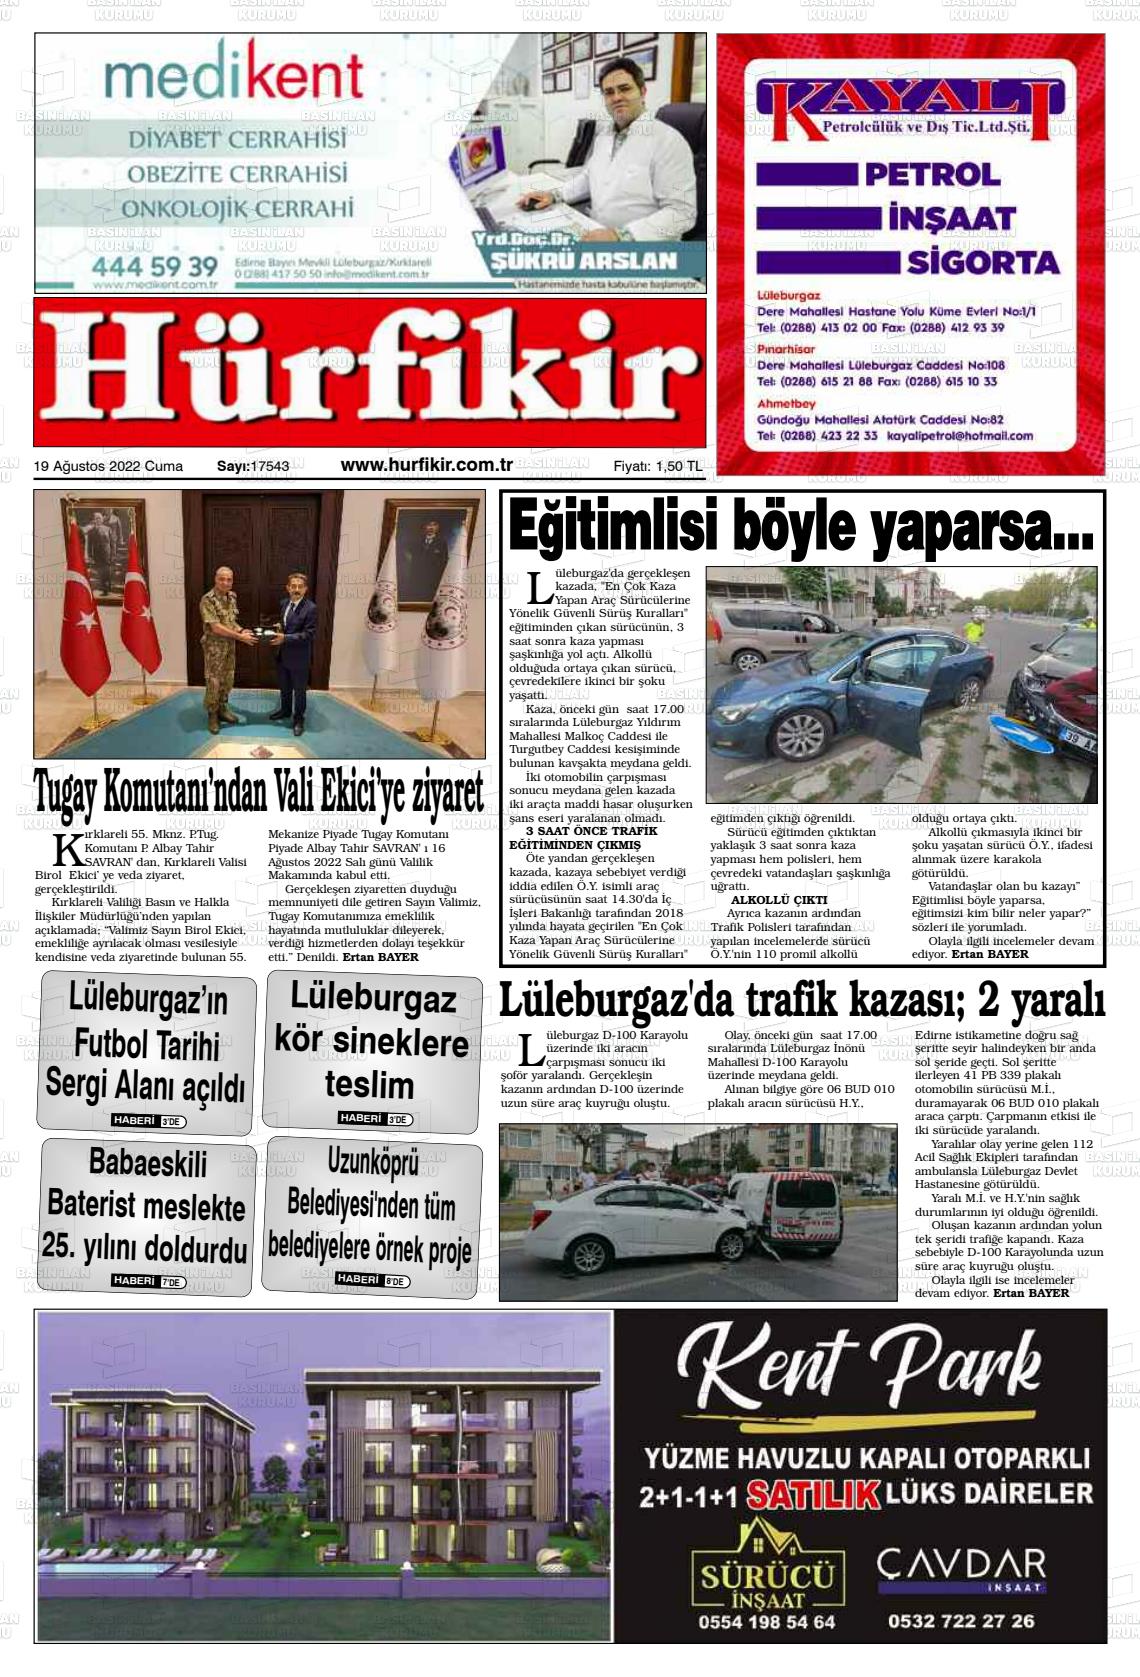 19 Ağustos 2022 Hürfikir Gazete Manşeti